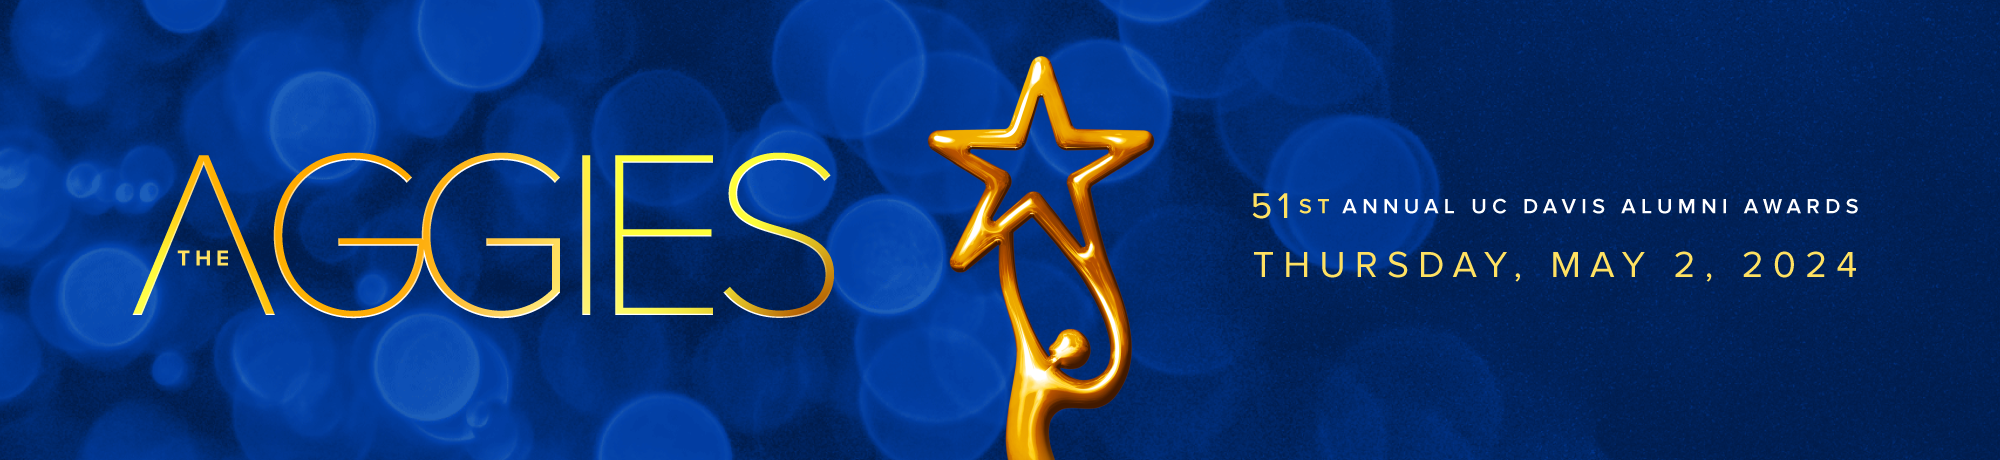 the aggies 51st annual uc davis alumni awards thursday may 2 2024